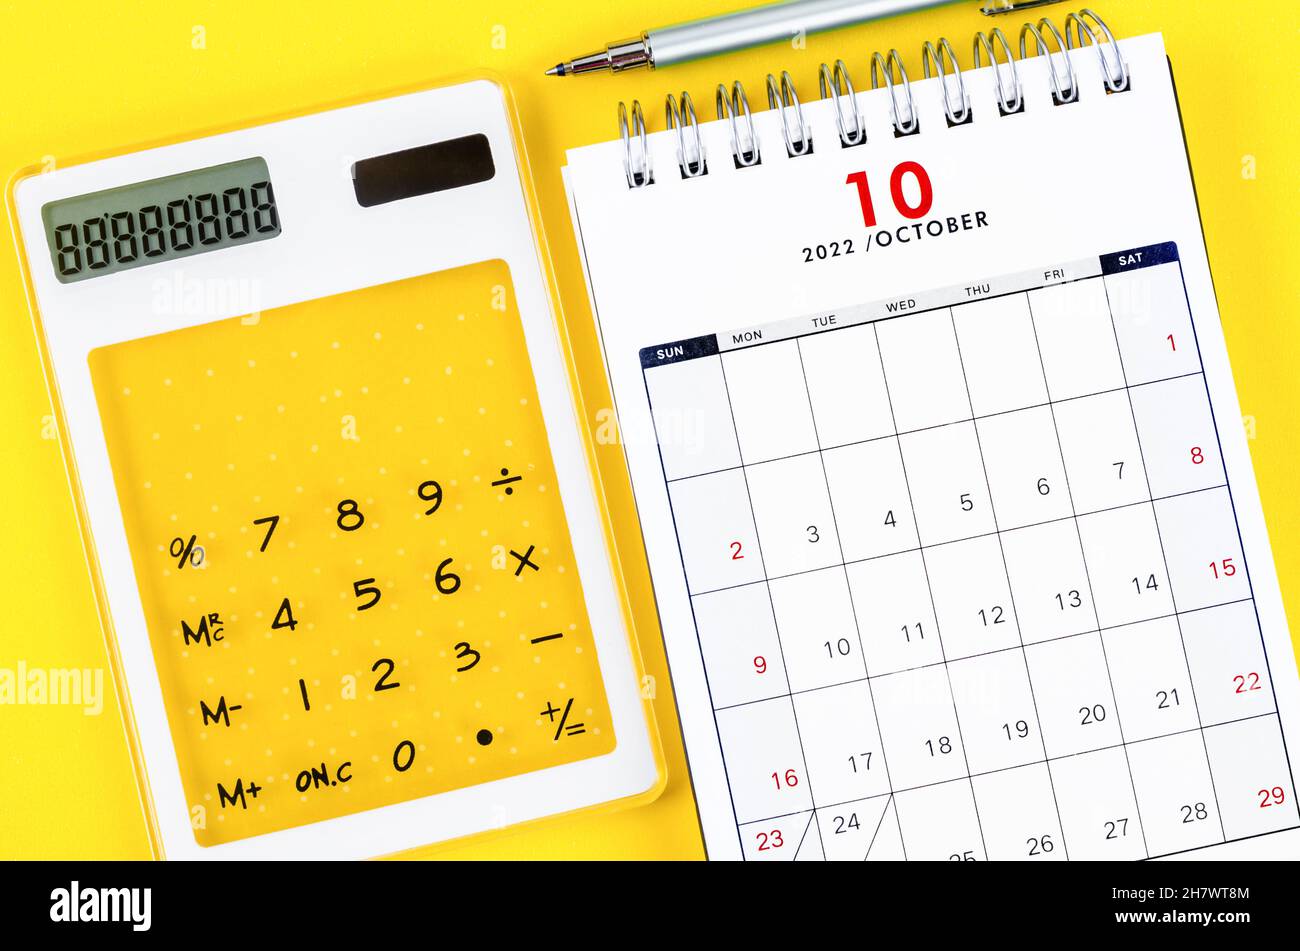 October 2022 Desktop Calendar The October 2022 Desk Calendar With Calculator And Pen On Yellow Background  Stock Photo - Alamy